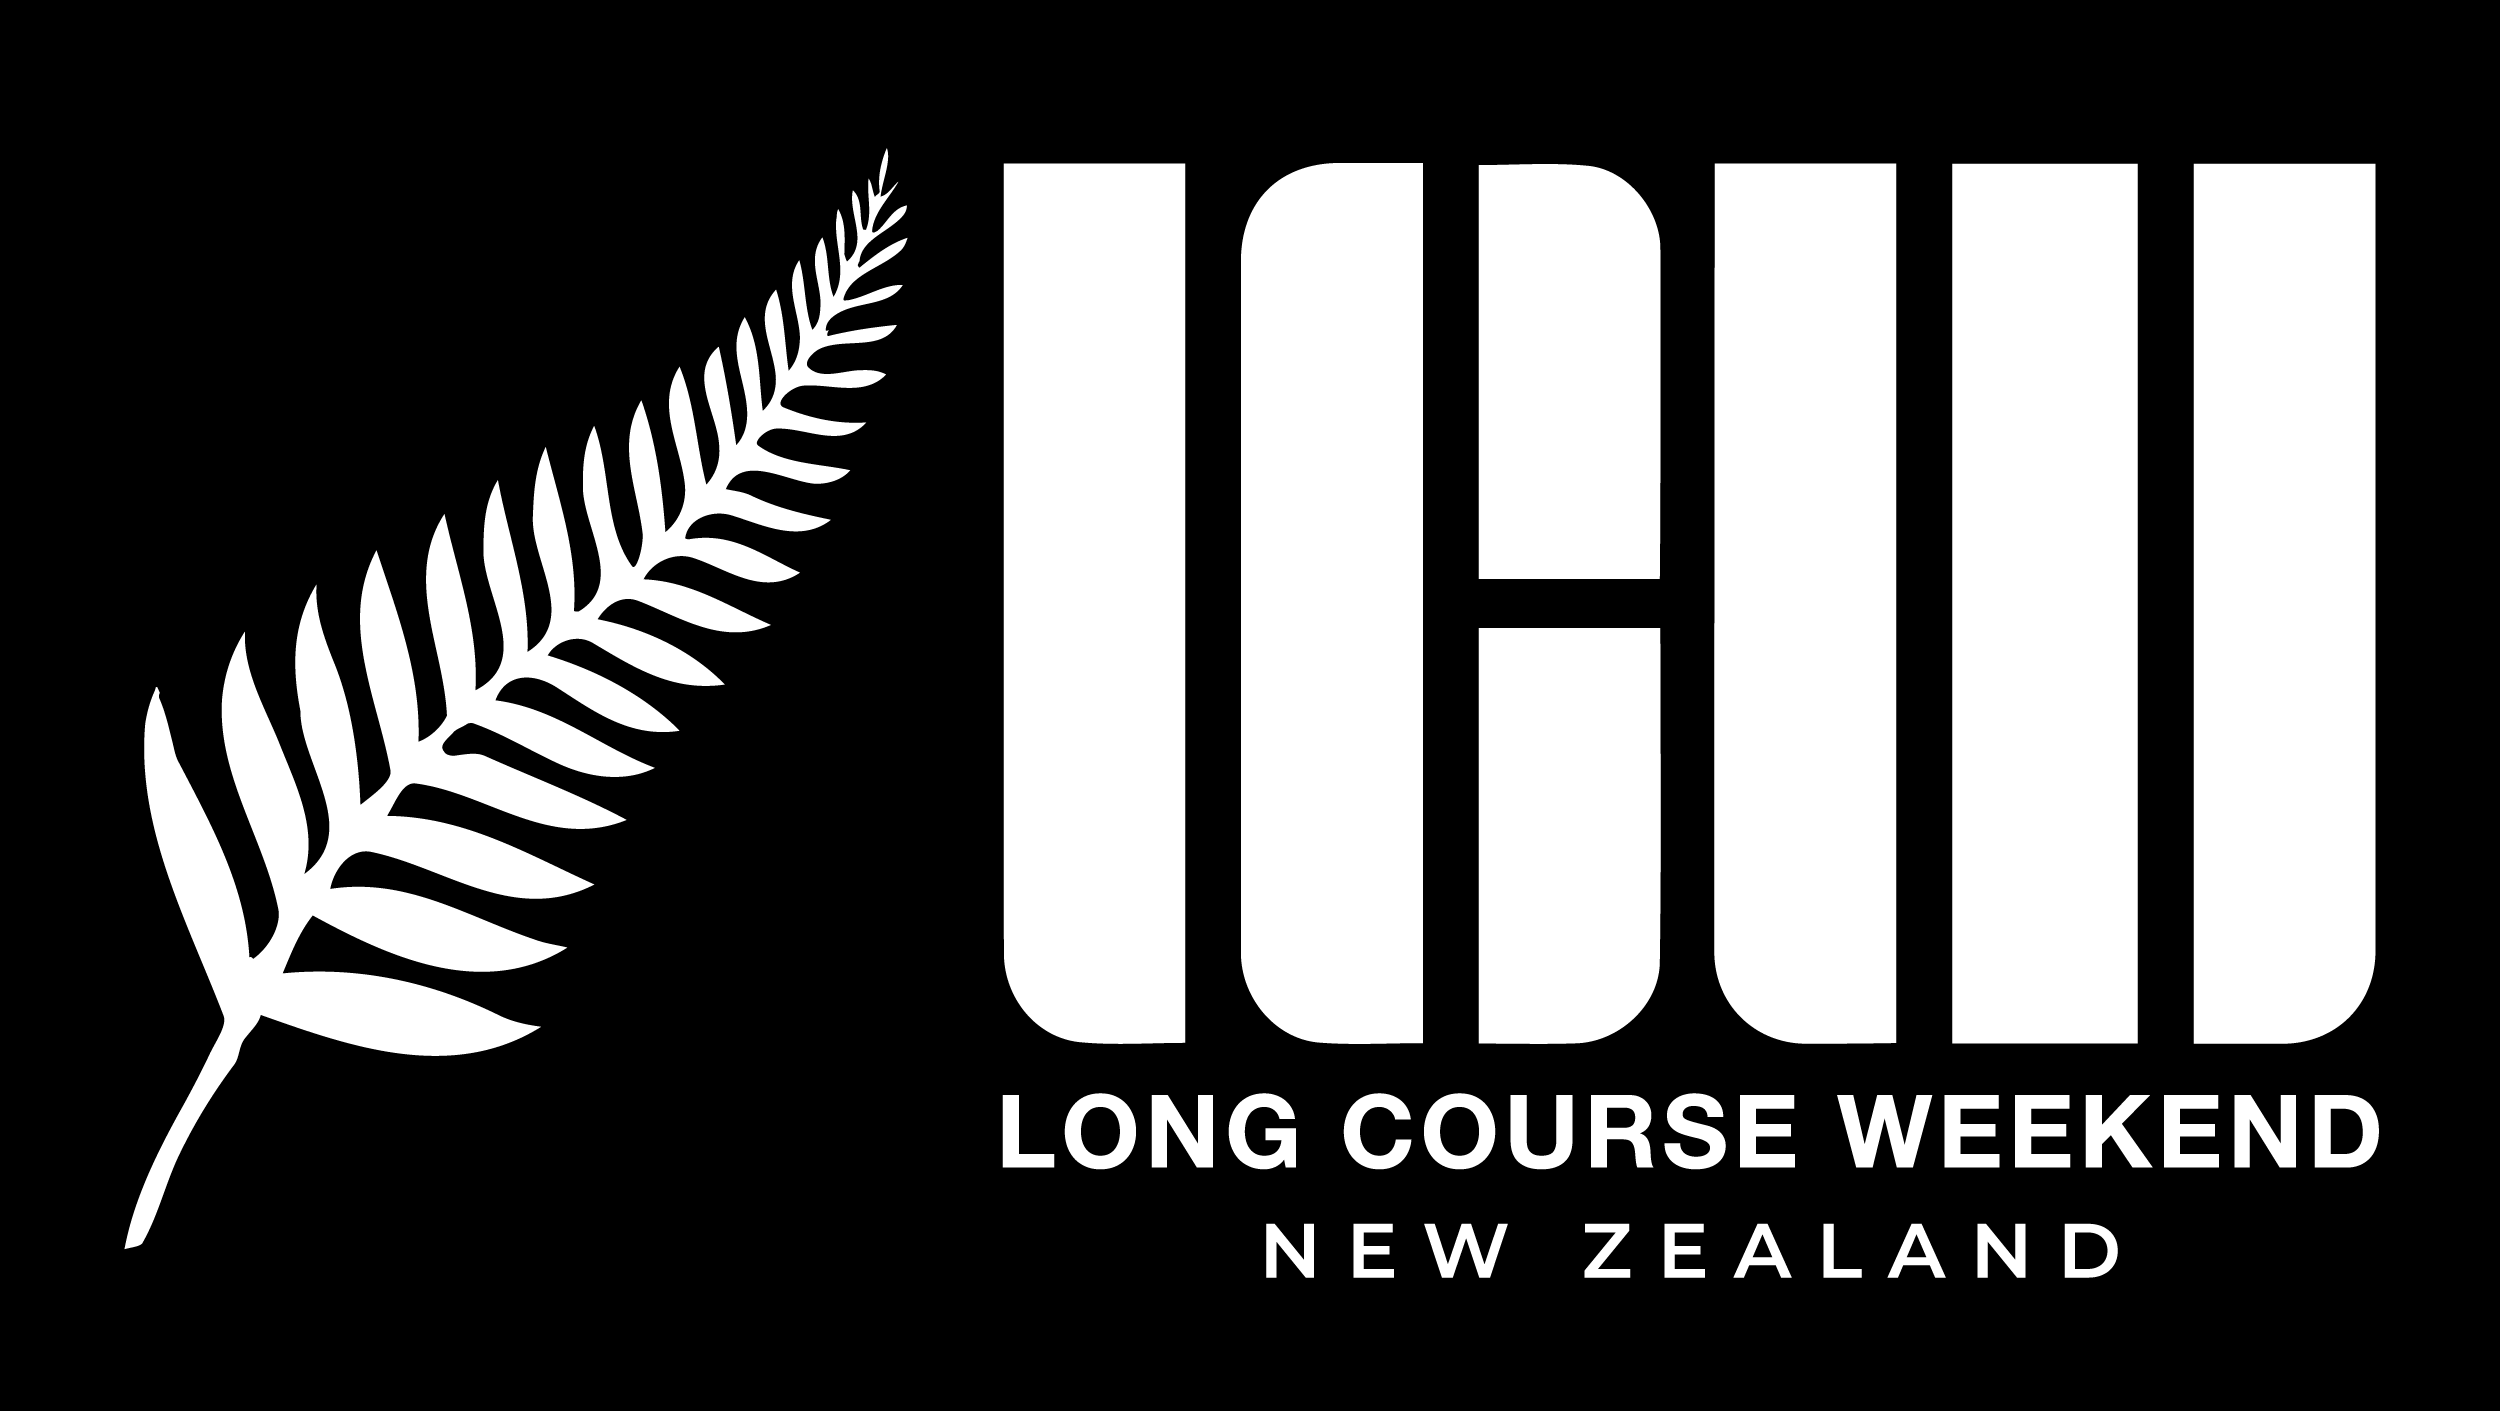 Long Course Weekend New Zealand